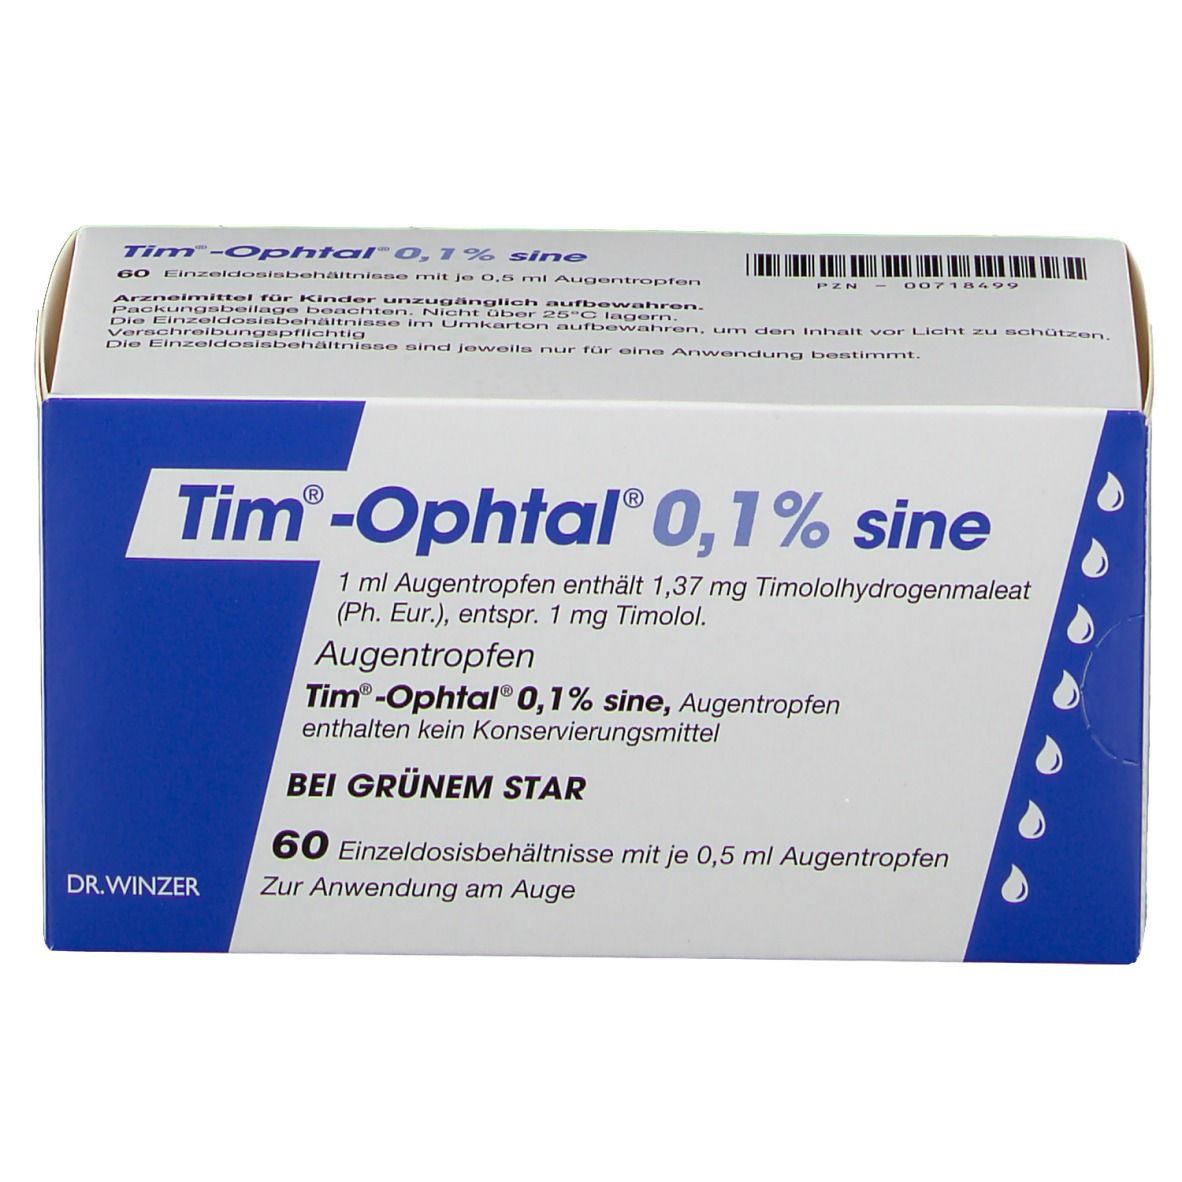 Tim®-Ophtal® 0,1 % sine